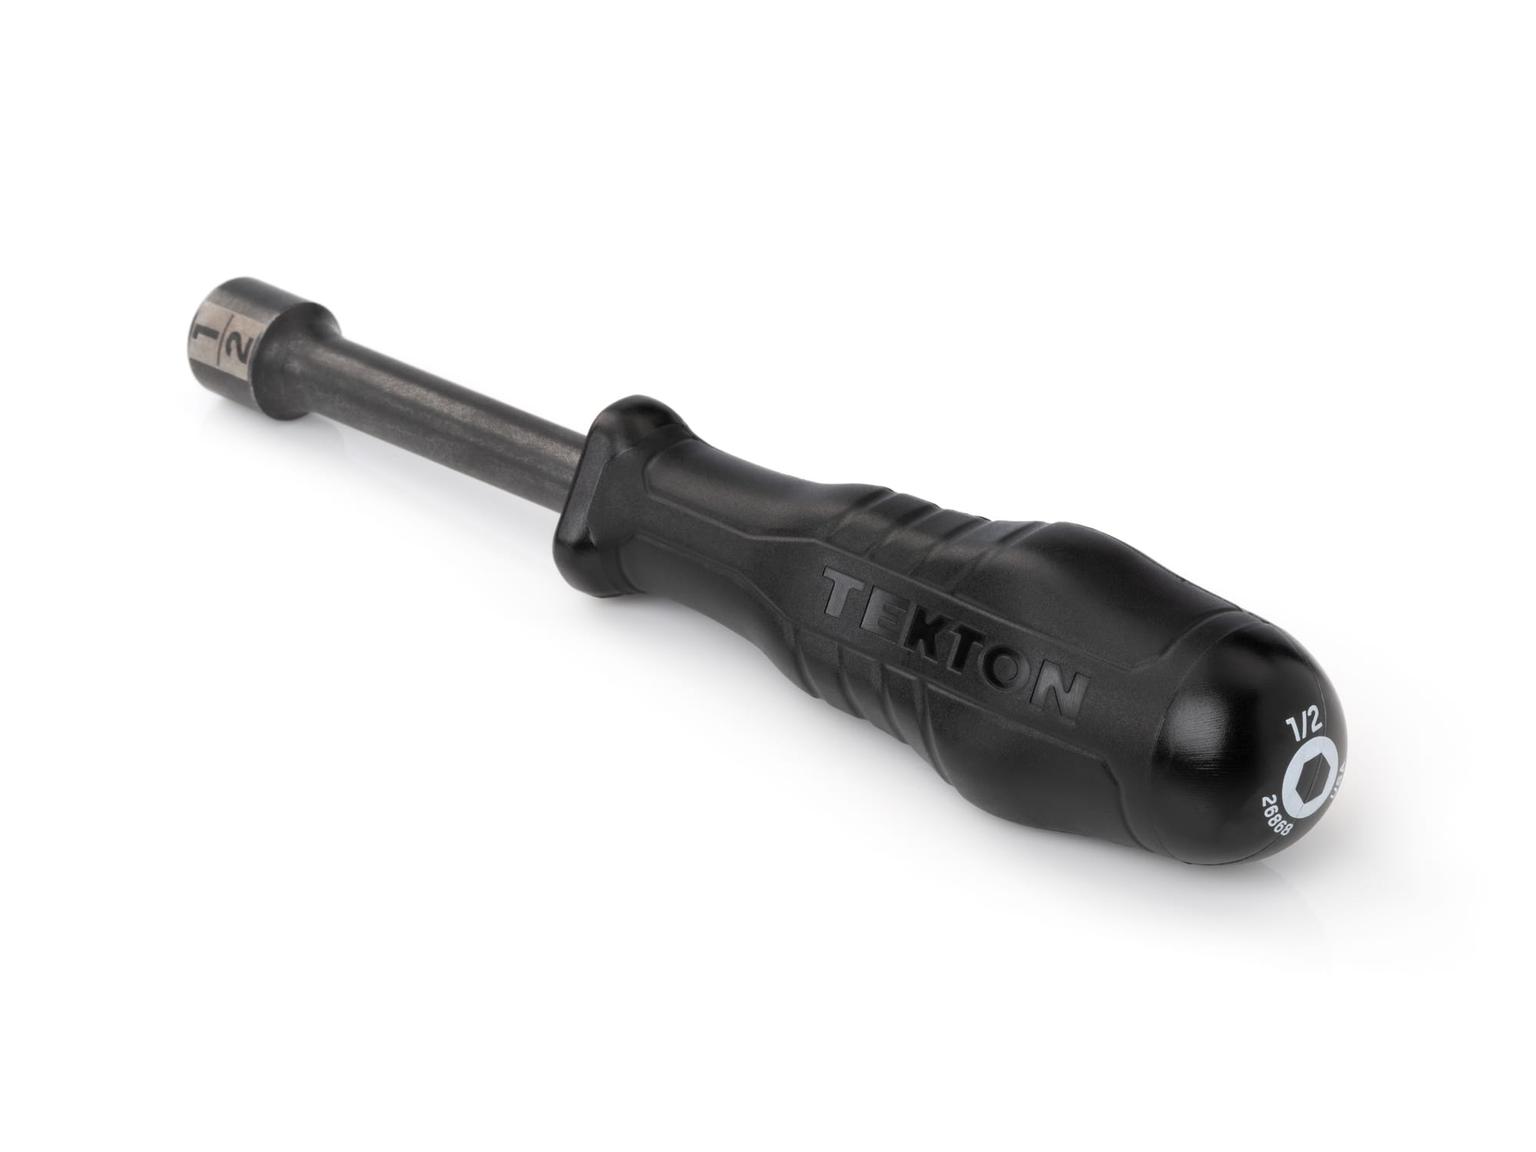 TEKTON 26868-T 1/2 Inch High-Torque Black Oxide Blade Nut Driver